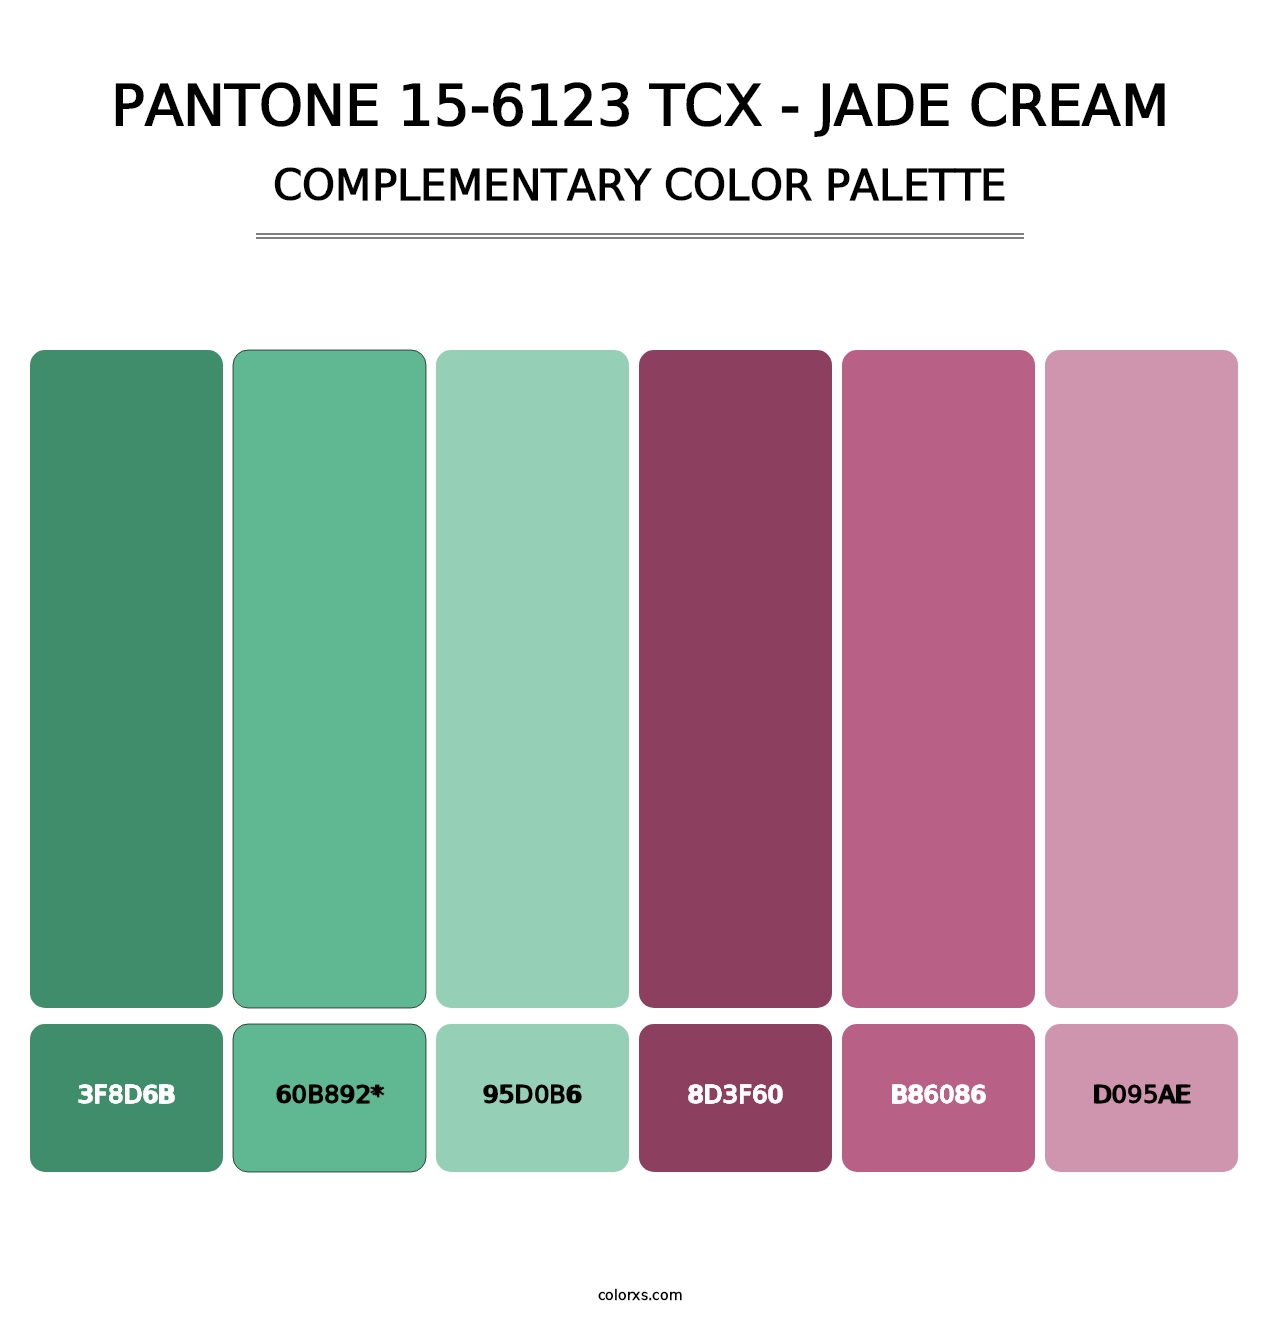 PANTONE 15-6123 TCX - Jade Cream - Complementary Color Palette